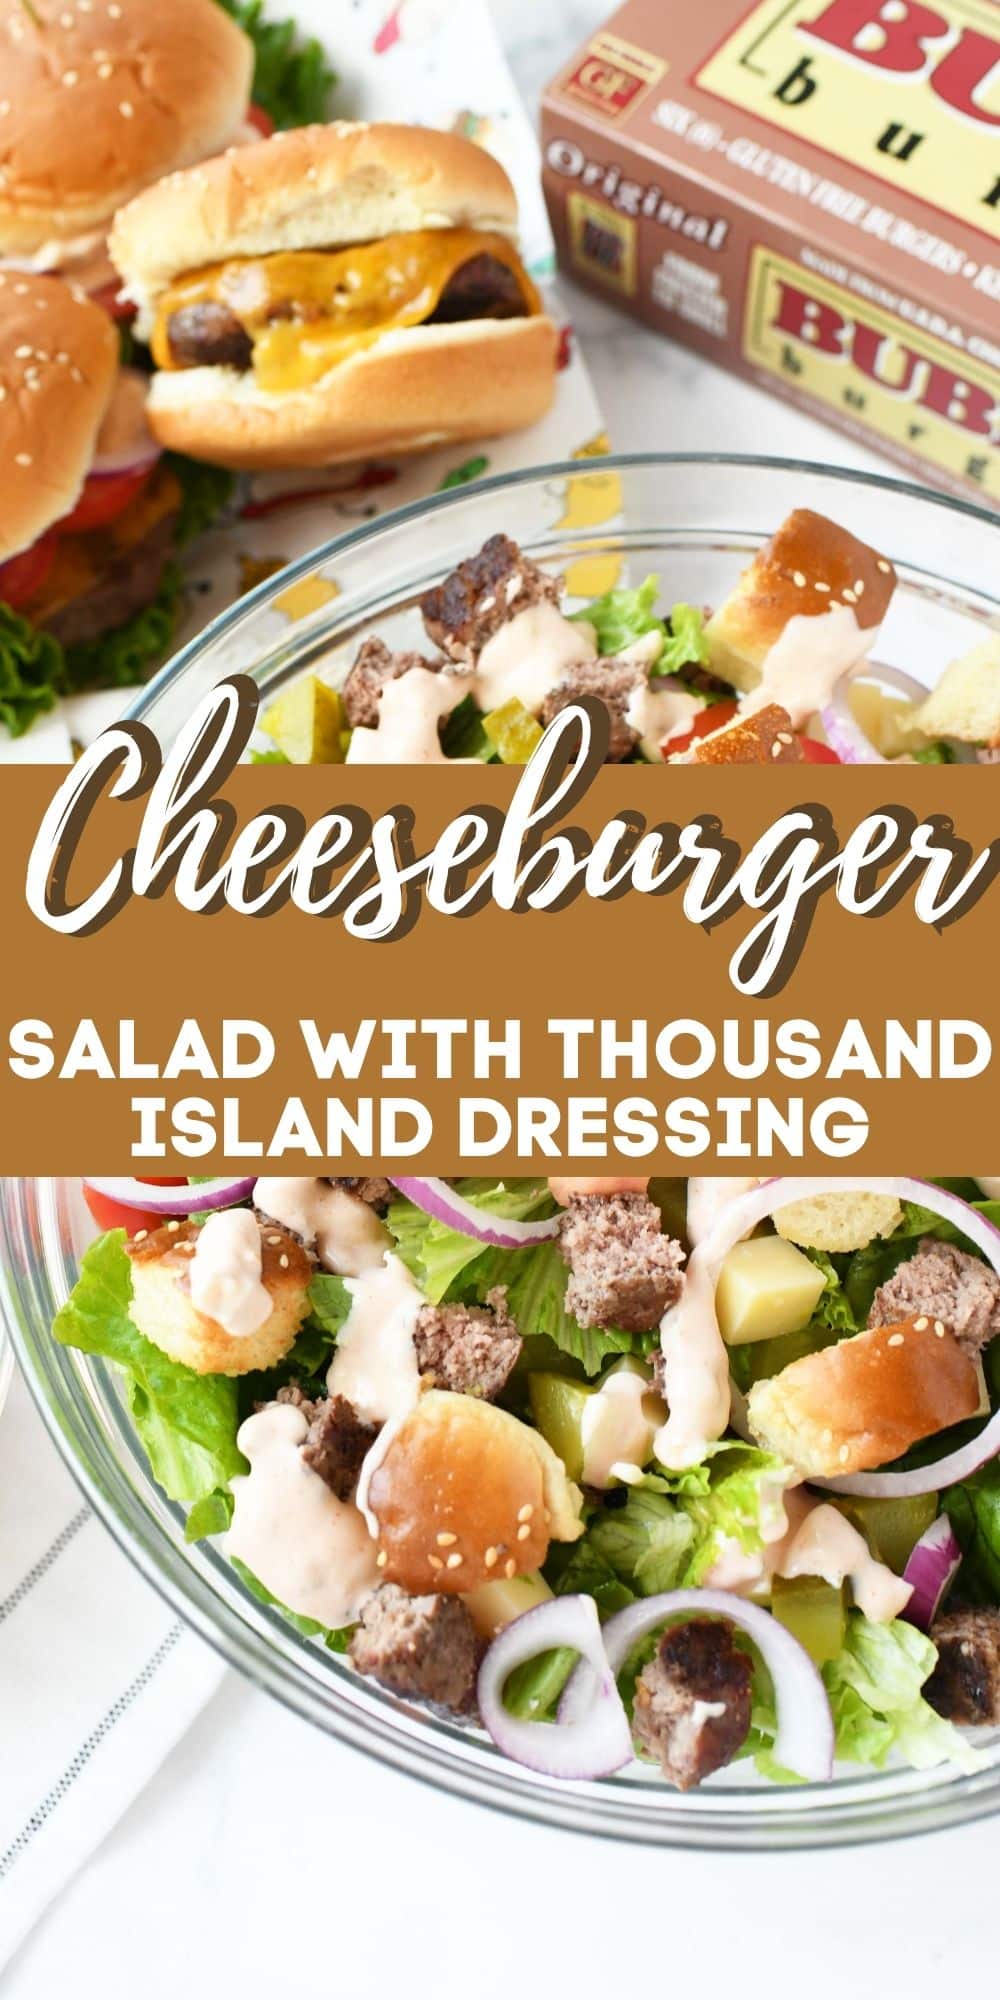 Cheeseburger Salad with Thousand Island Dressing